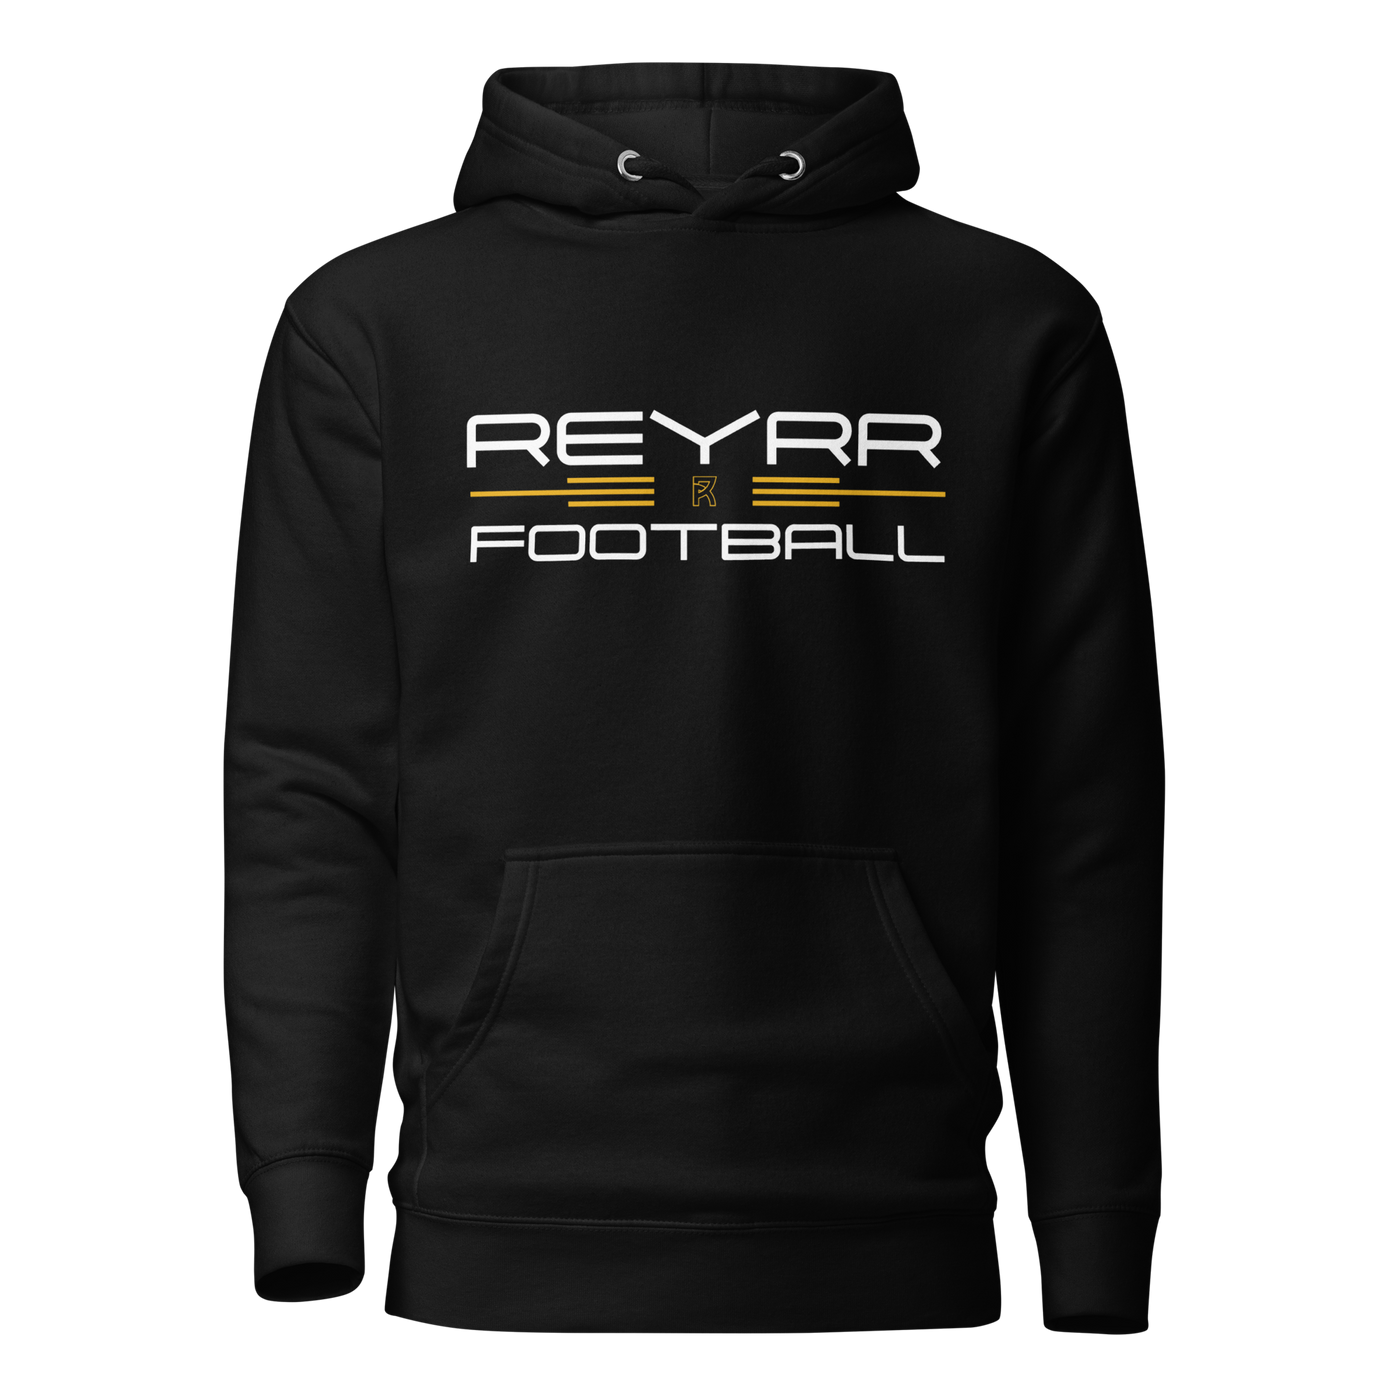 REYRR FOOTBALL Hoodie - Premium  from Reyrr Athletics - Shop now at Reyrr Athletics